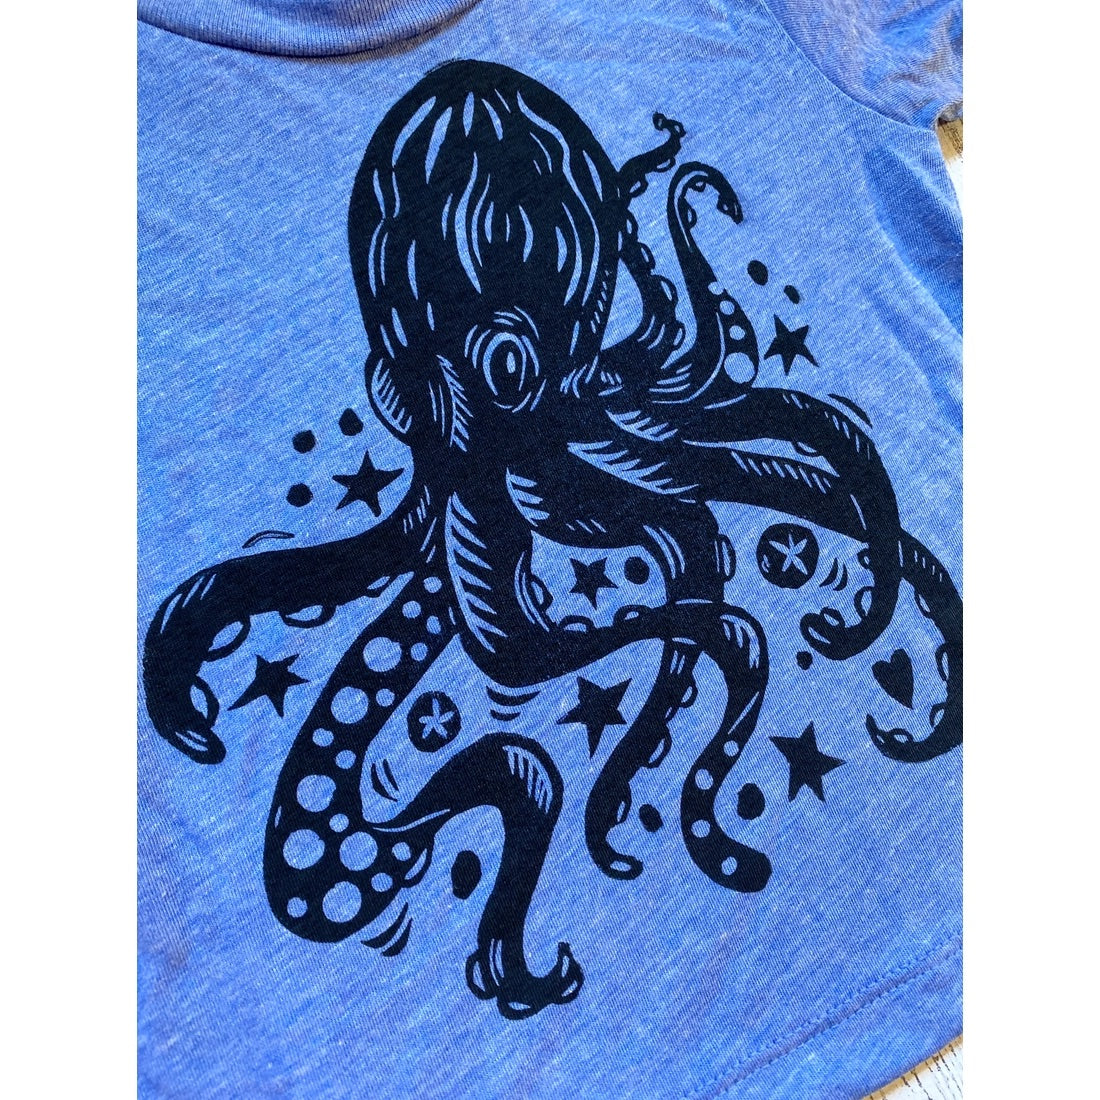  Block Print Octopus Tee